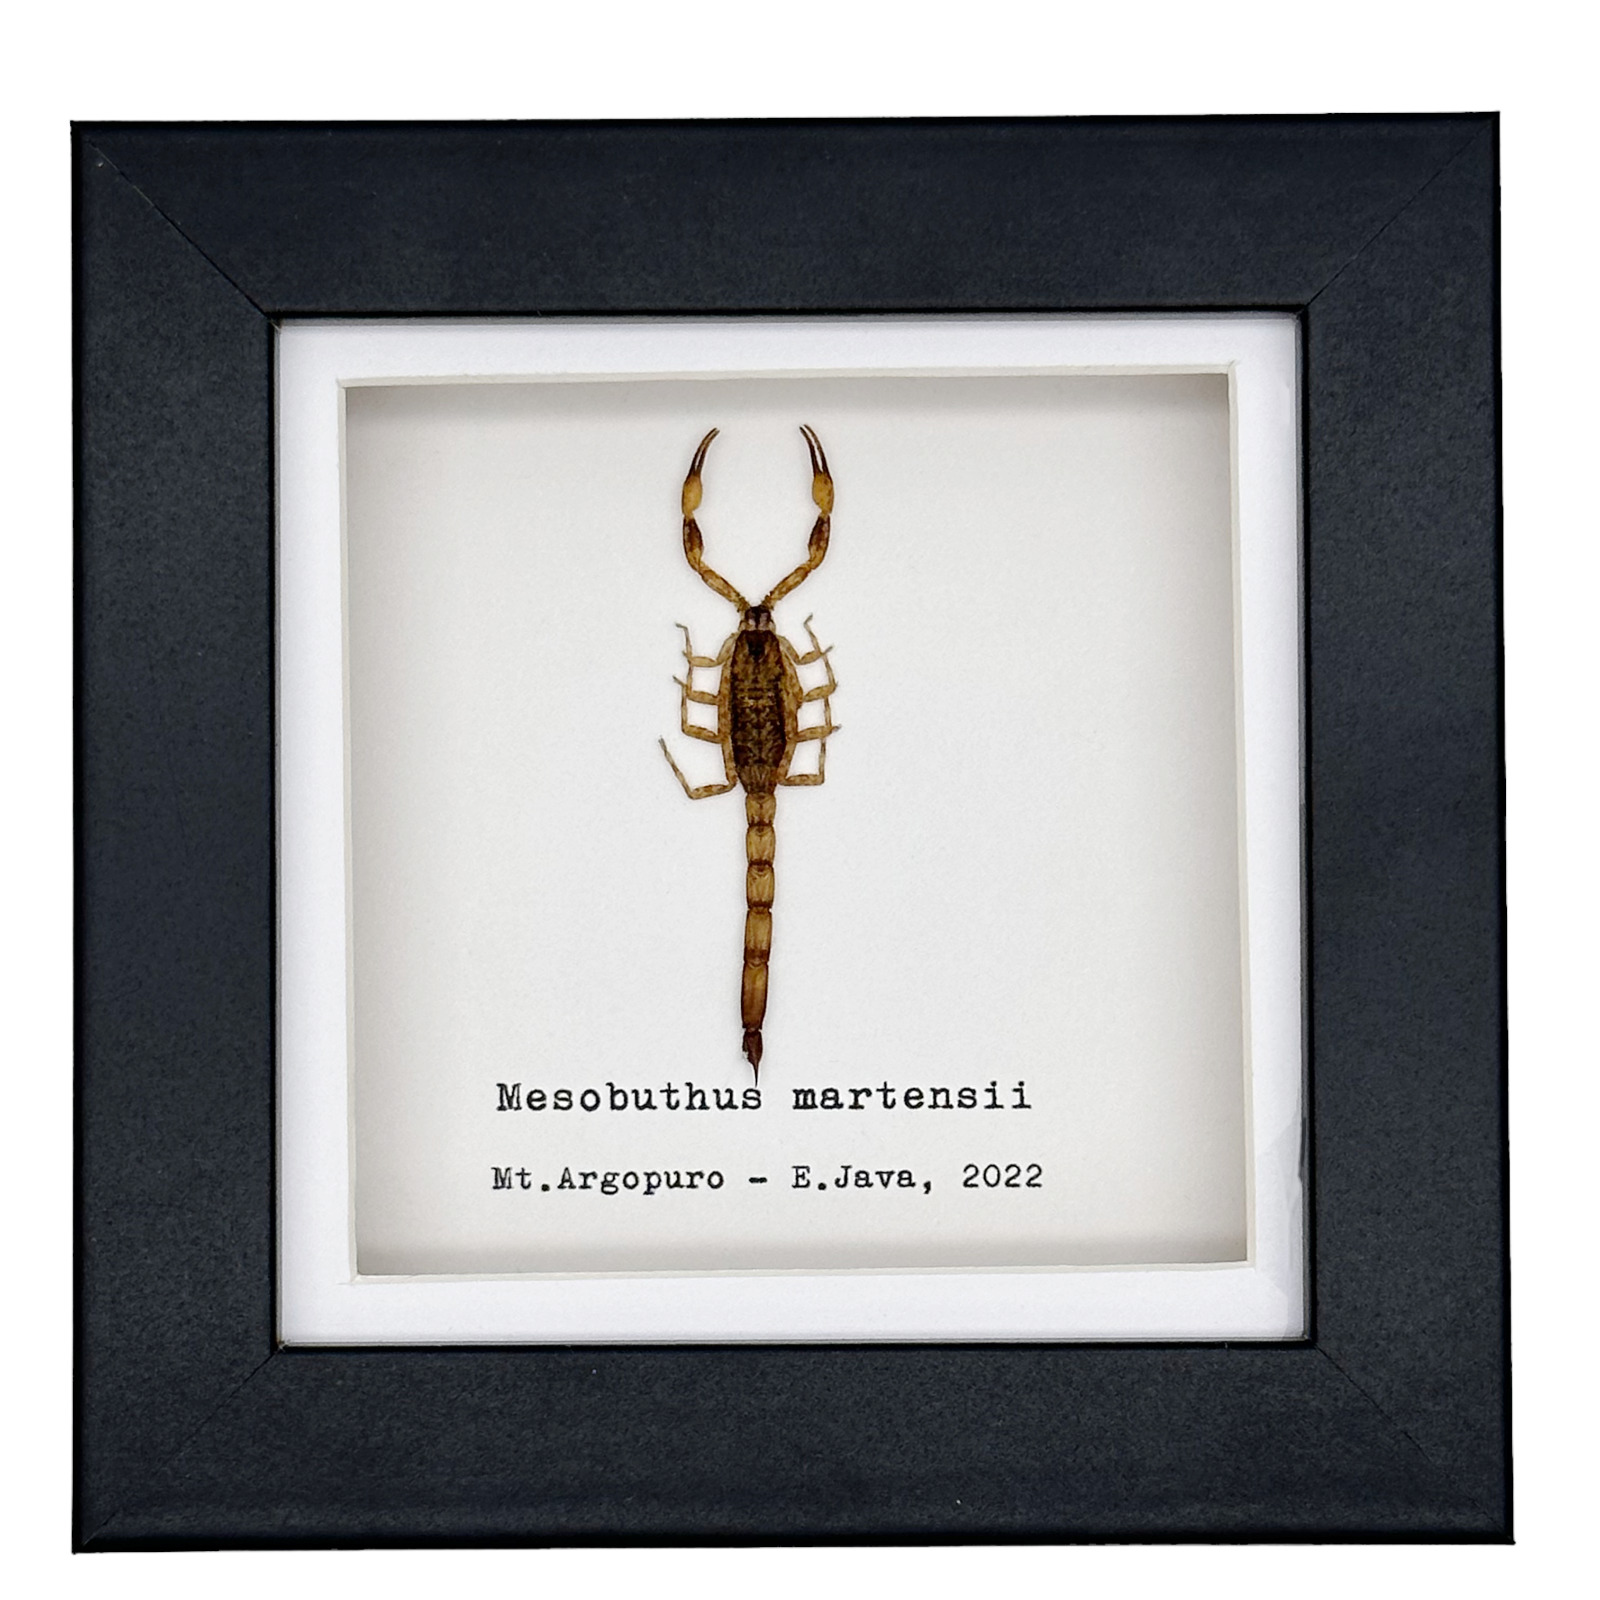 Manchurian scorpion Mesobuthus martensii, Shadow Box Mounted Entomology Specimen